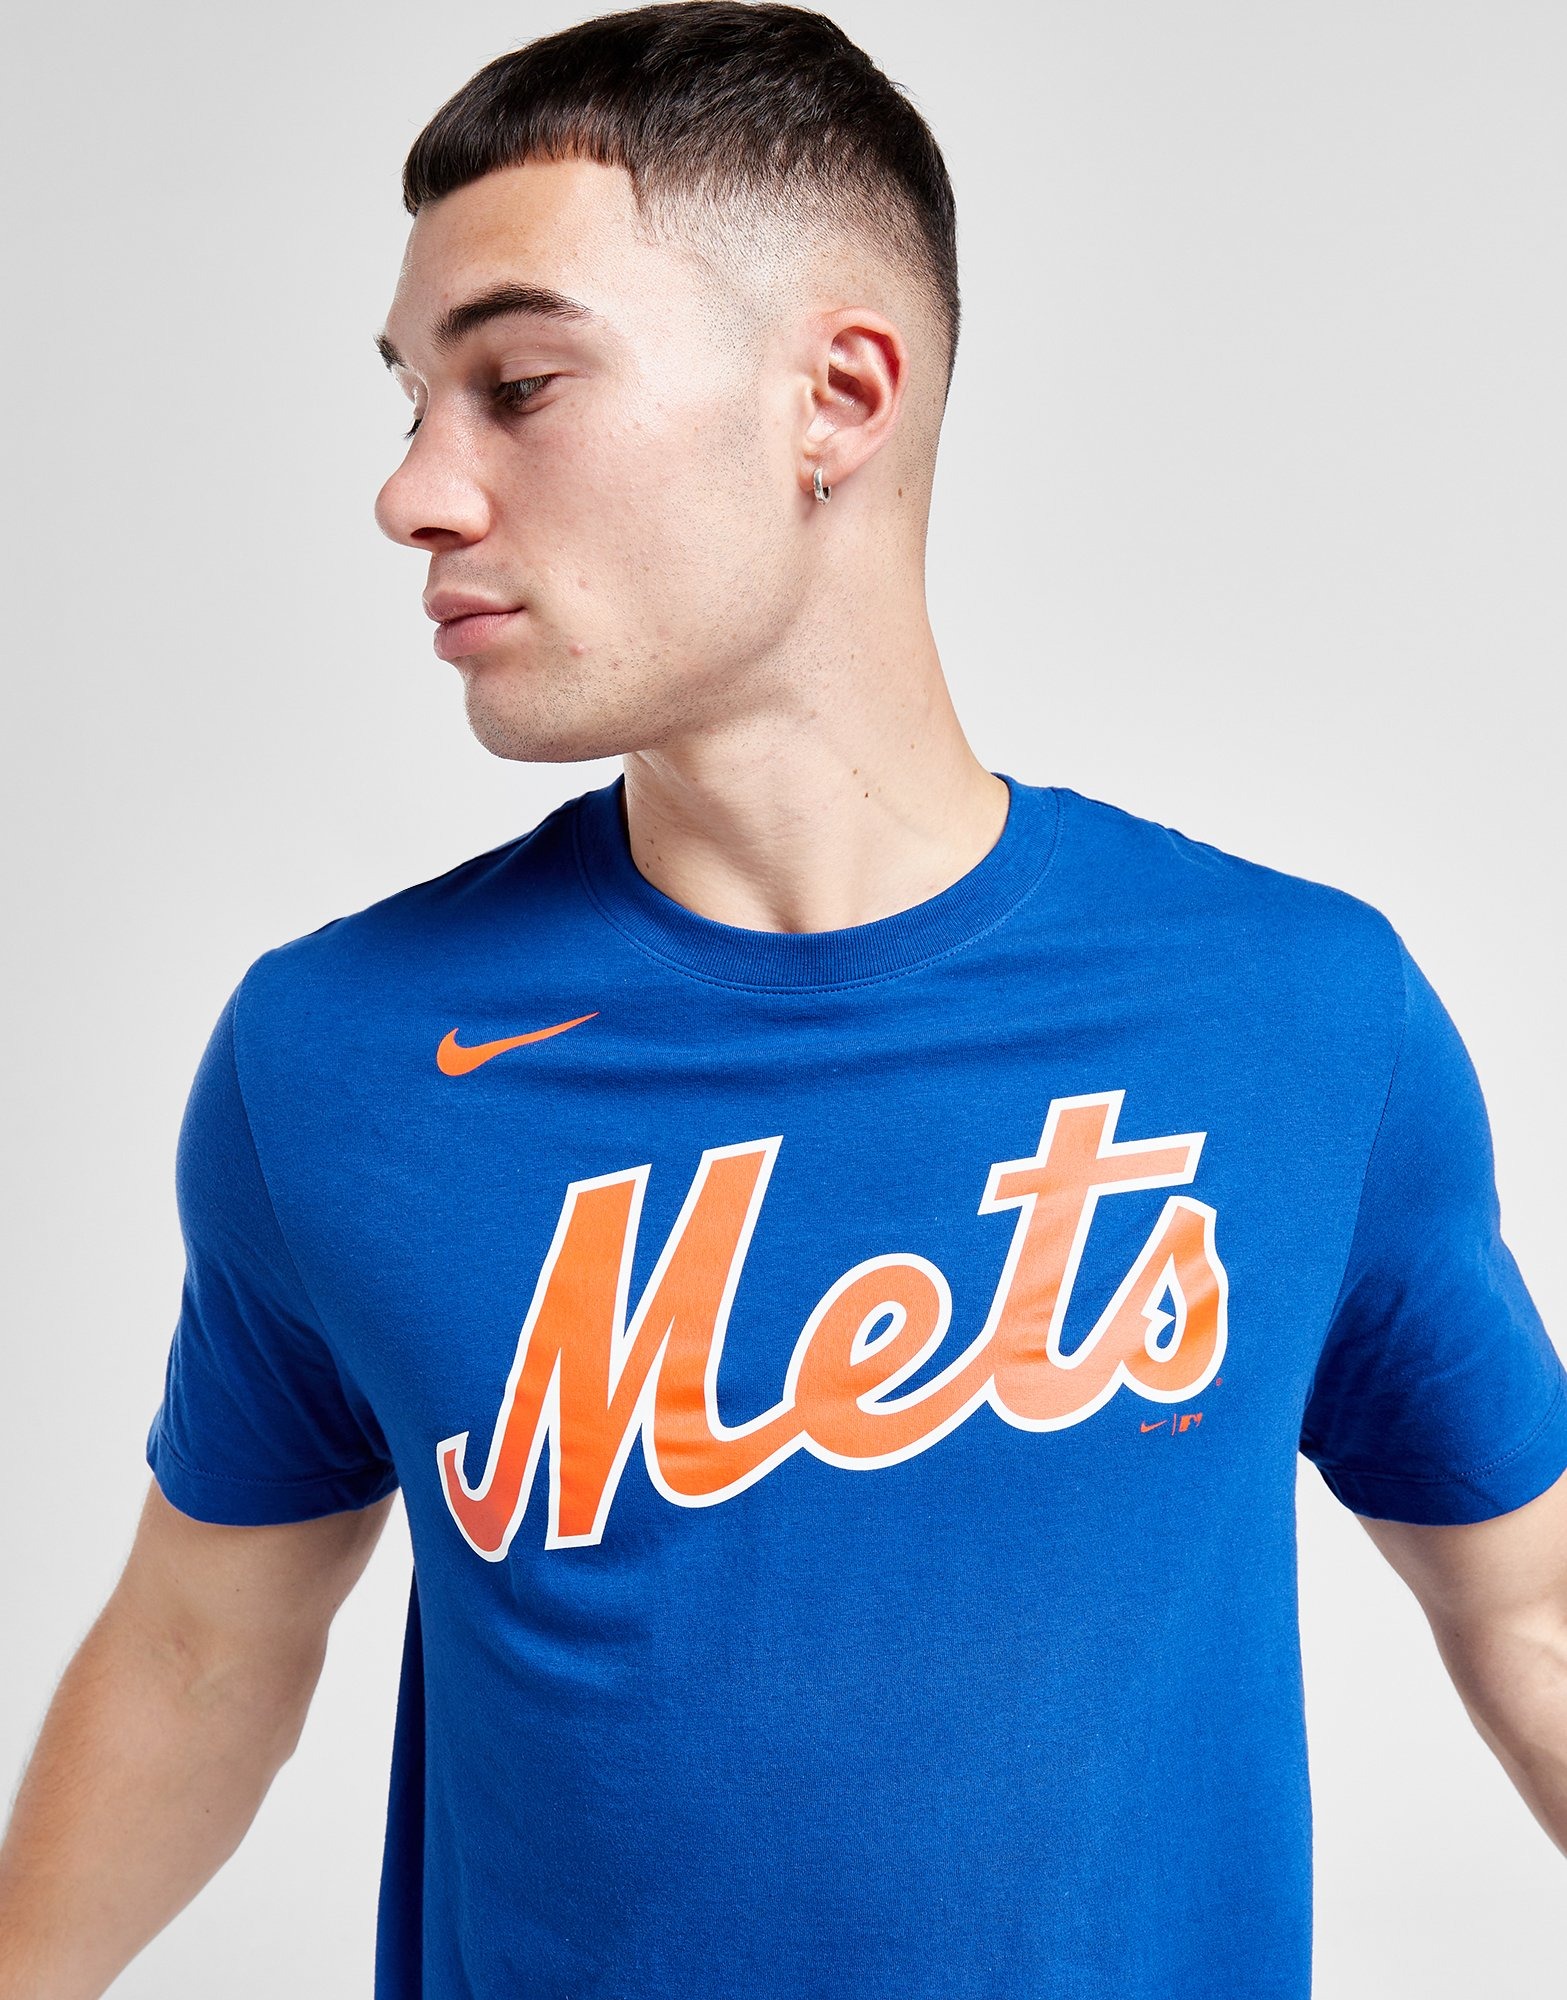 Nike MLB New York Mets Youth Jersey Size Medium Blue Orange